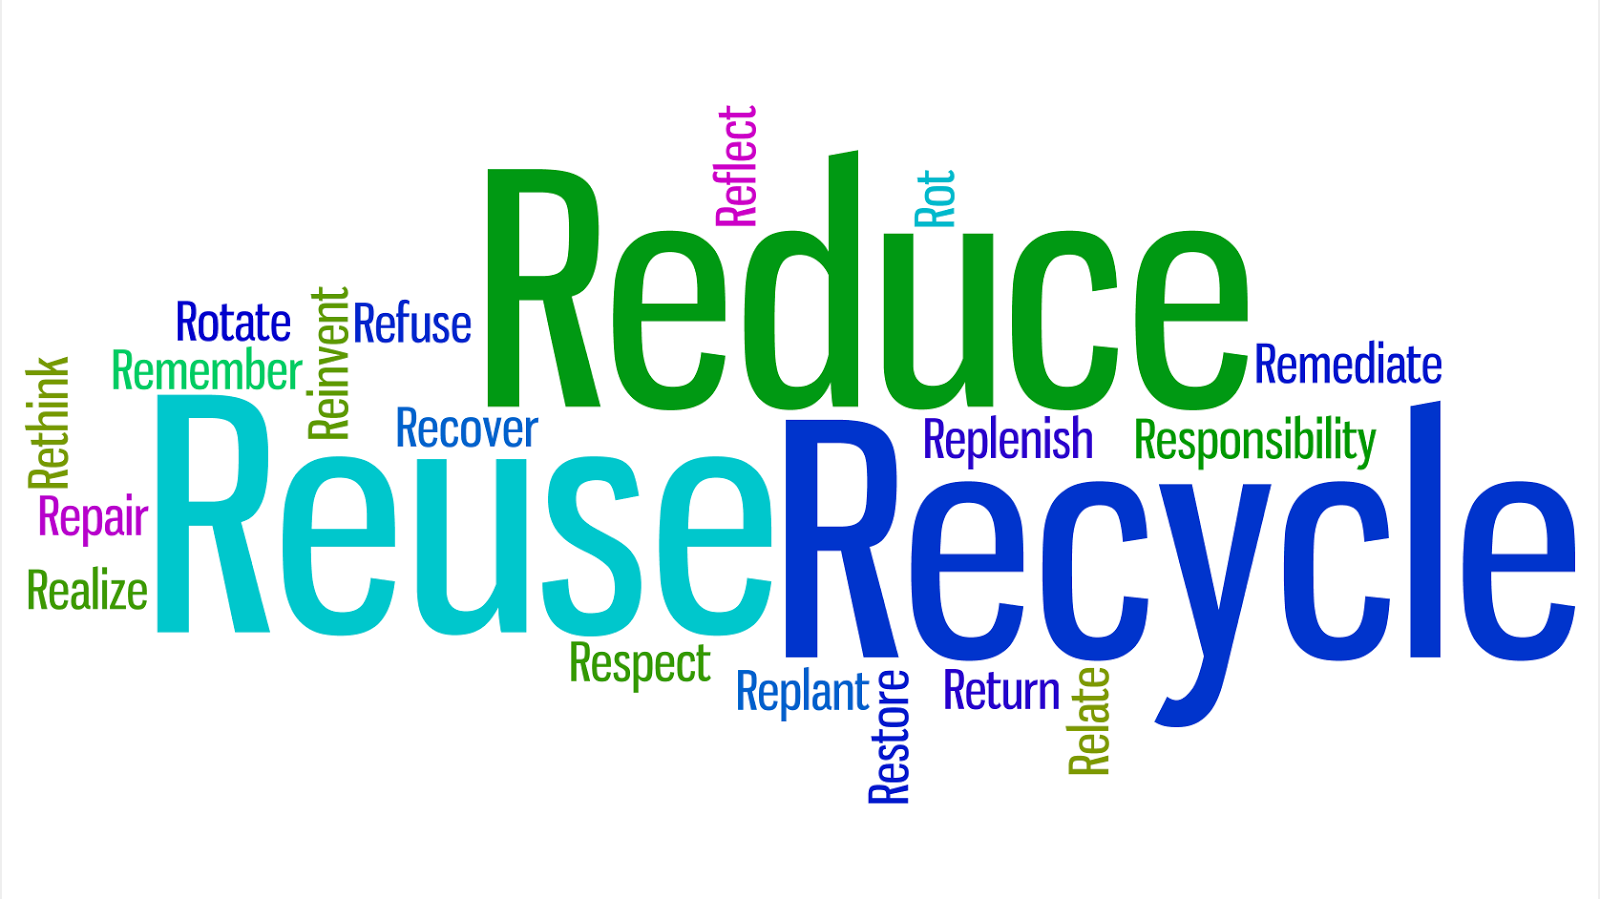 Prinsip pengolahan limbah keras dikenal dengan nama 3r yaitu reduce reuse dan recycle jelaskan pengertian masing-masing istilah tersebut